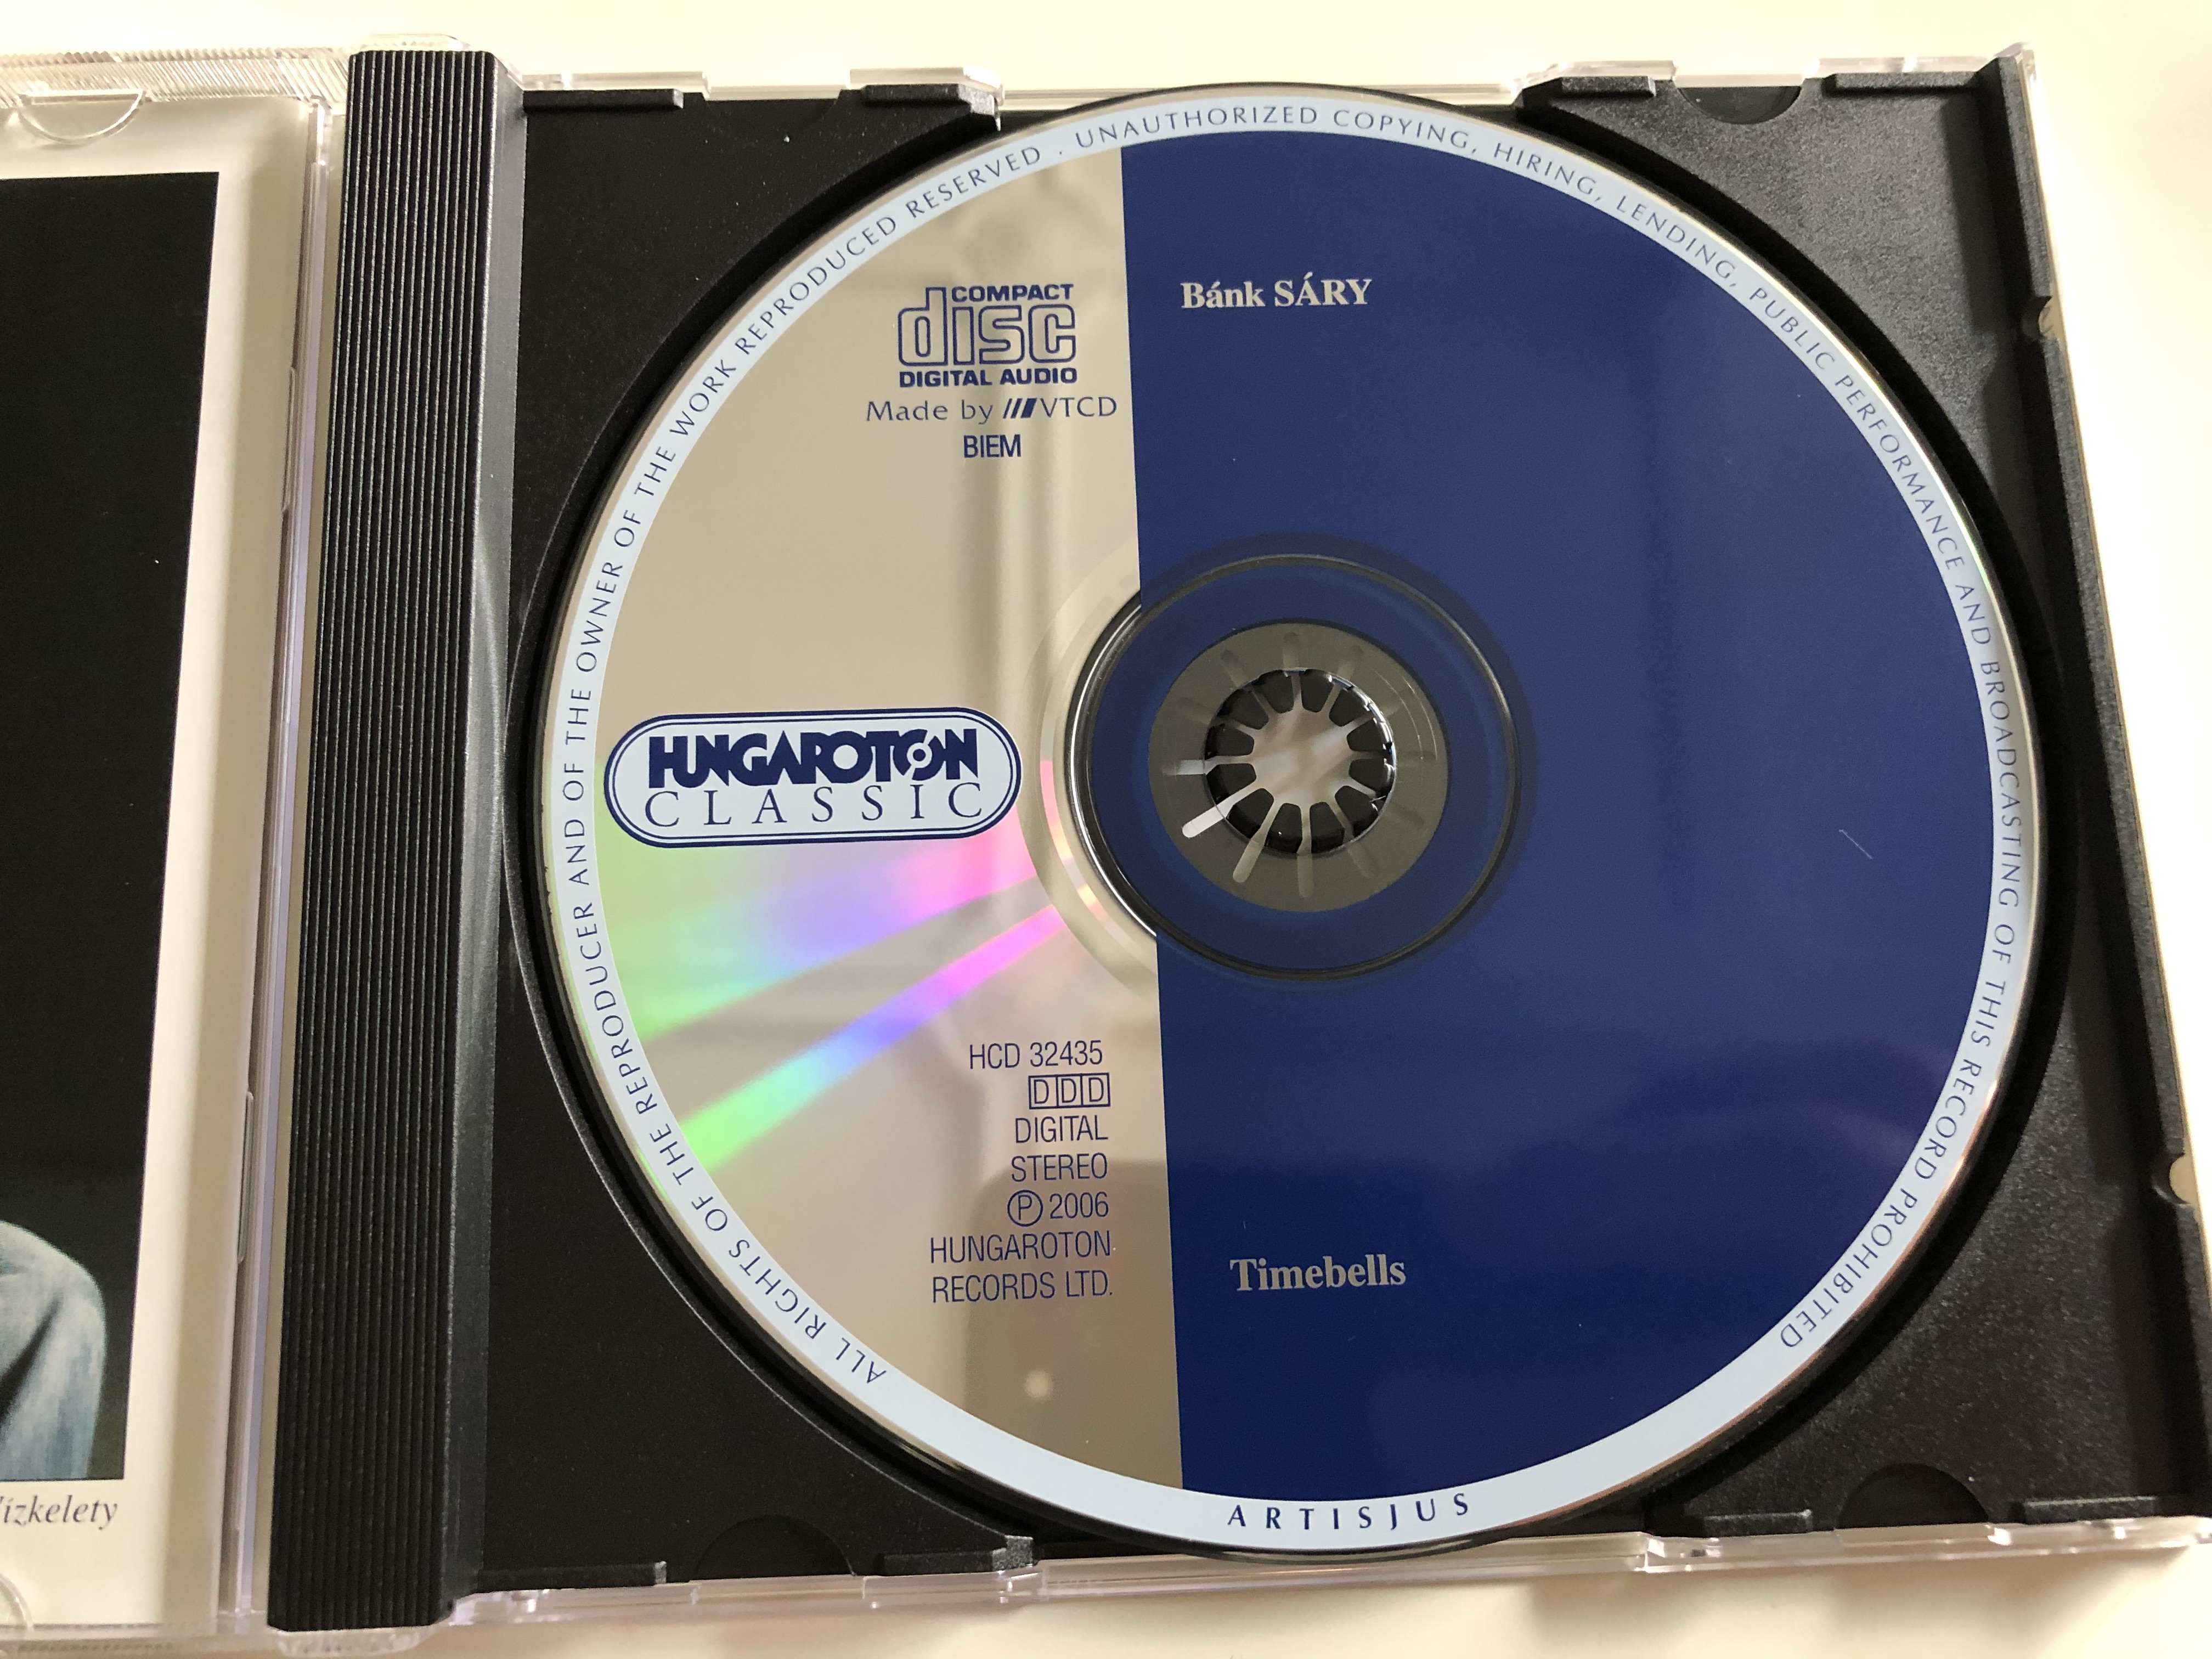 b-nk-s-ry-timebells-hungaroton-audio-cd-2006-hcd-32435-7-.jpg